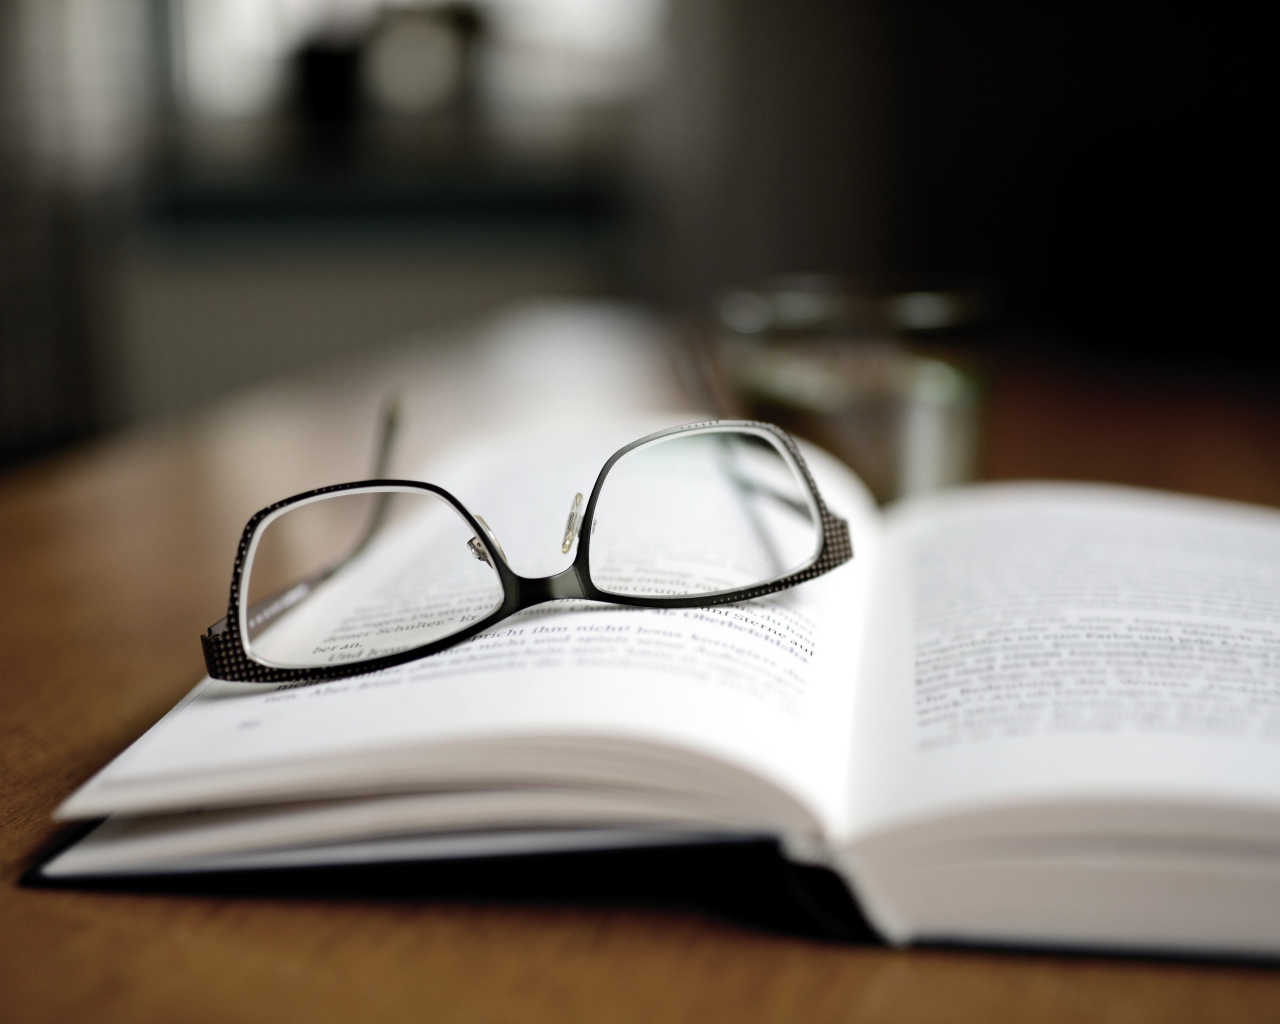 Black glasses lie on the book